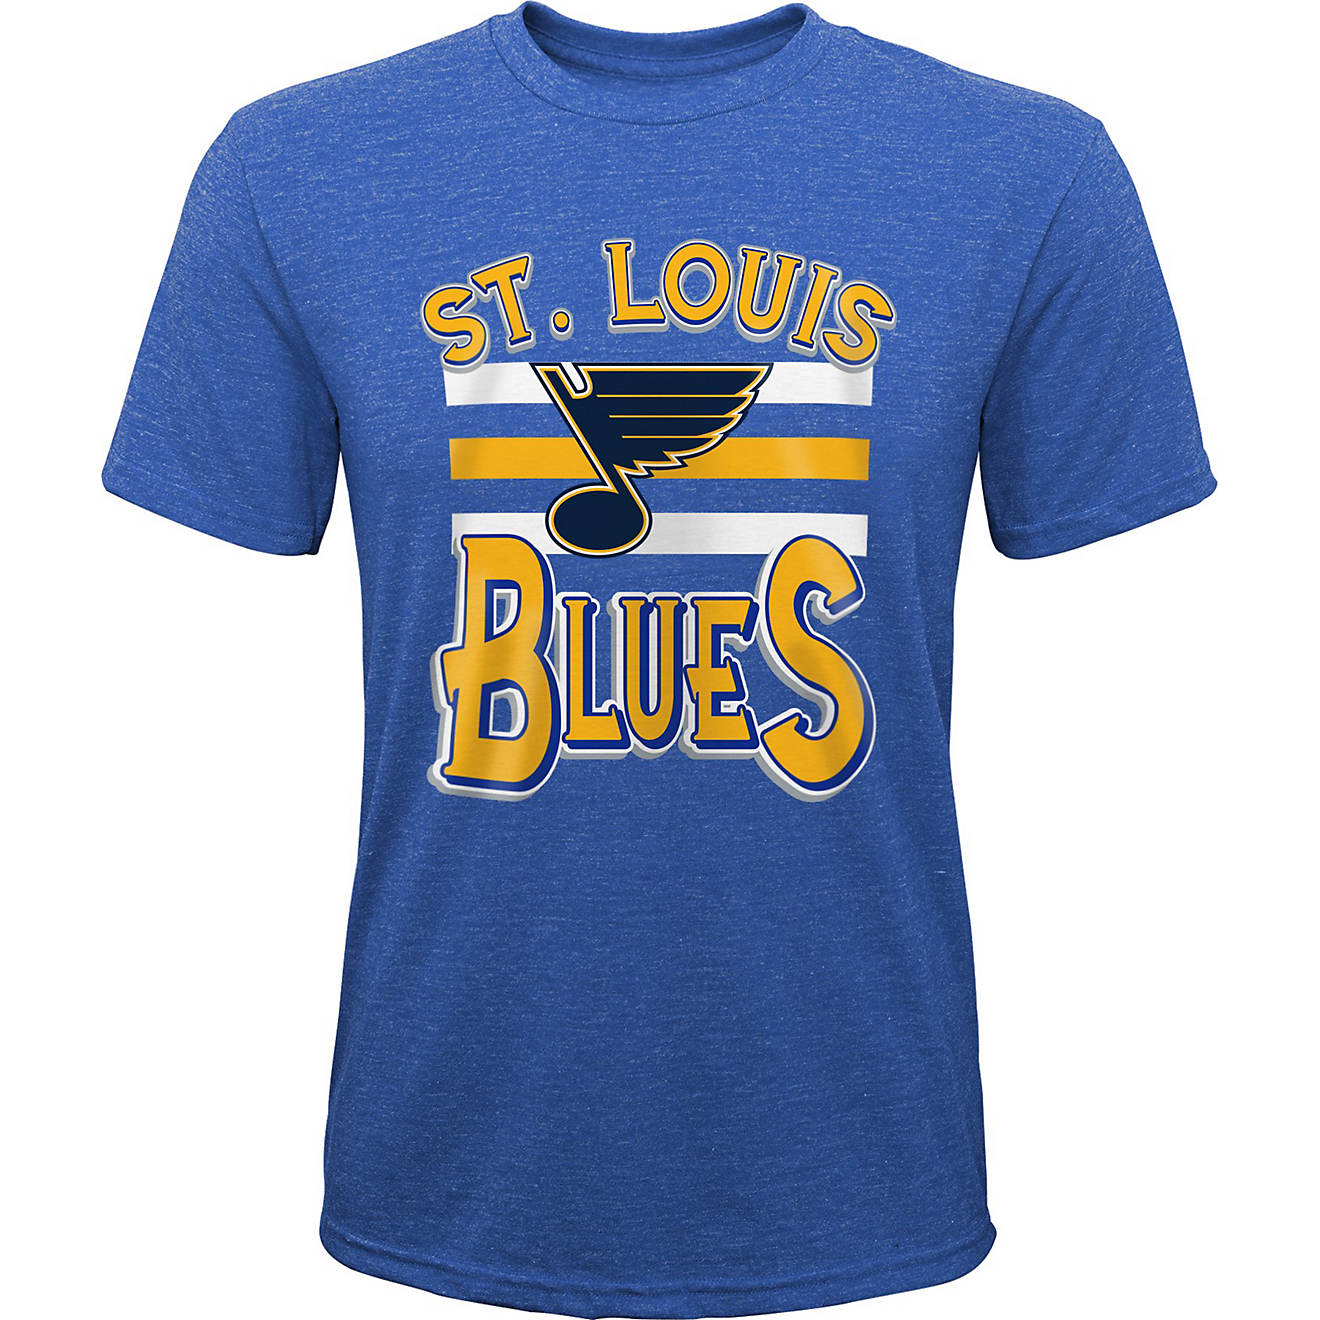 Youth Black St. Louis Blues T-Shirt